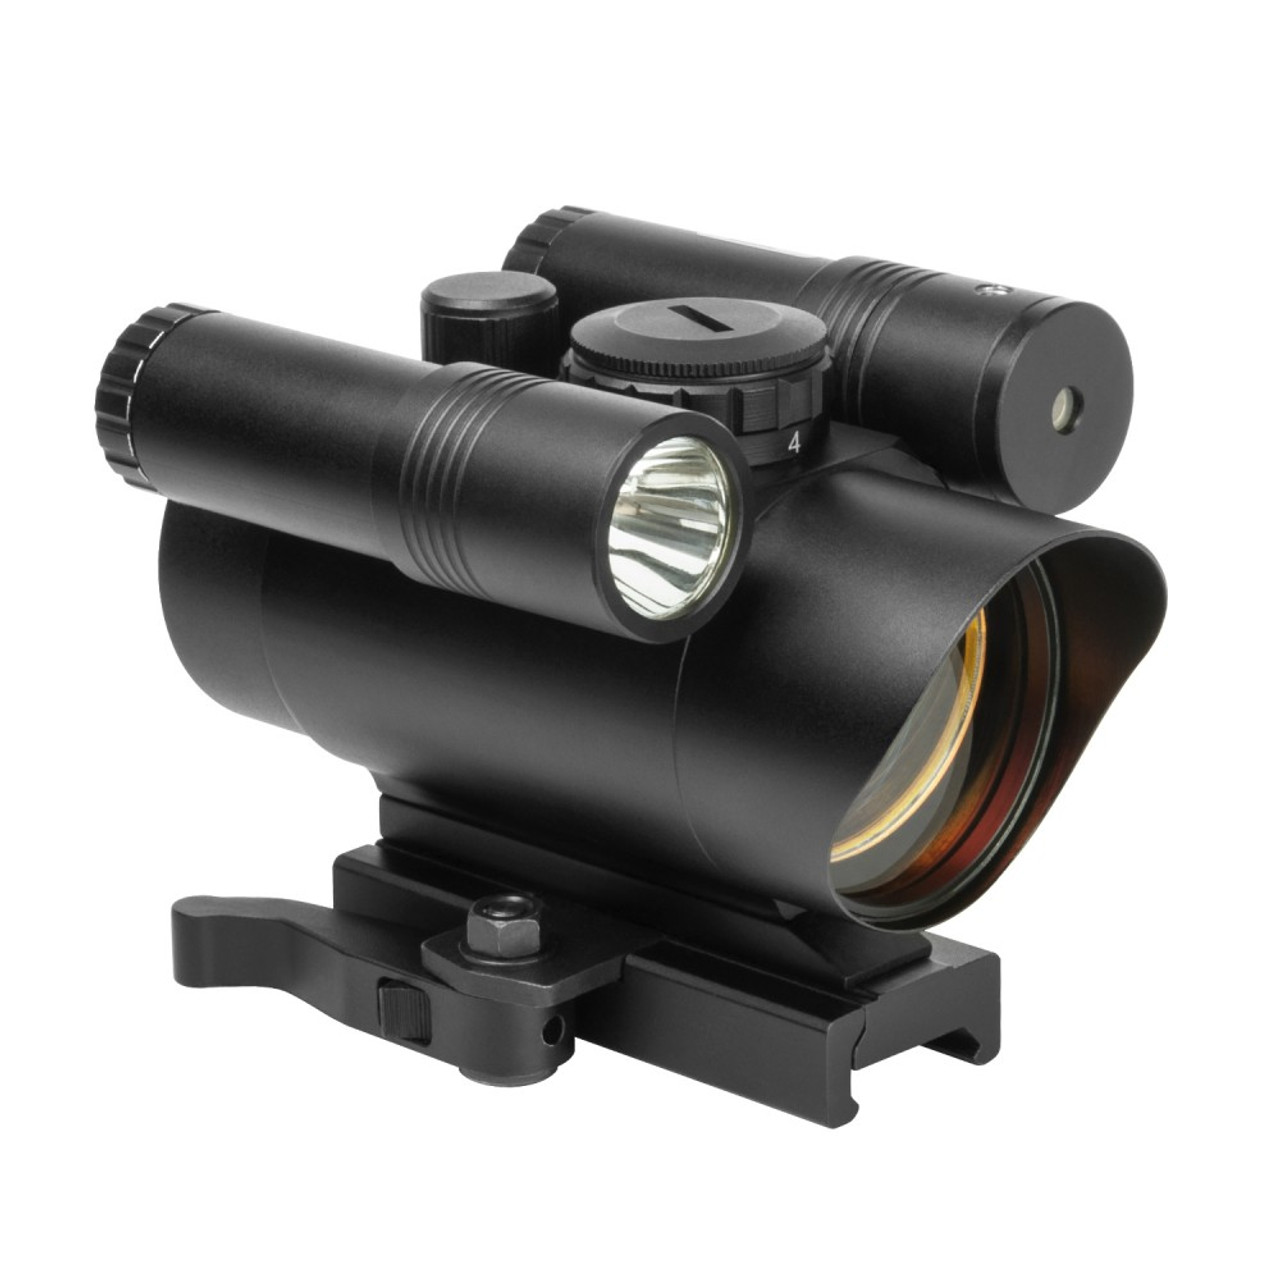 NcSTAR VDFLGQ142 1X42Mm Quick Release Red Dot W/Green Laser & Flashlight